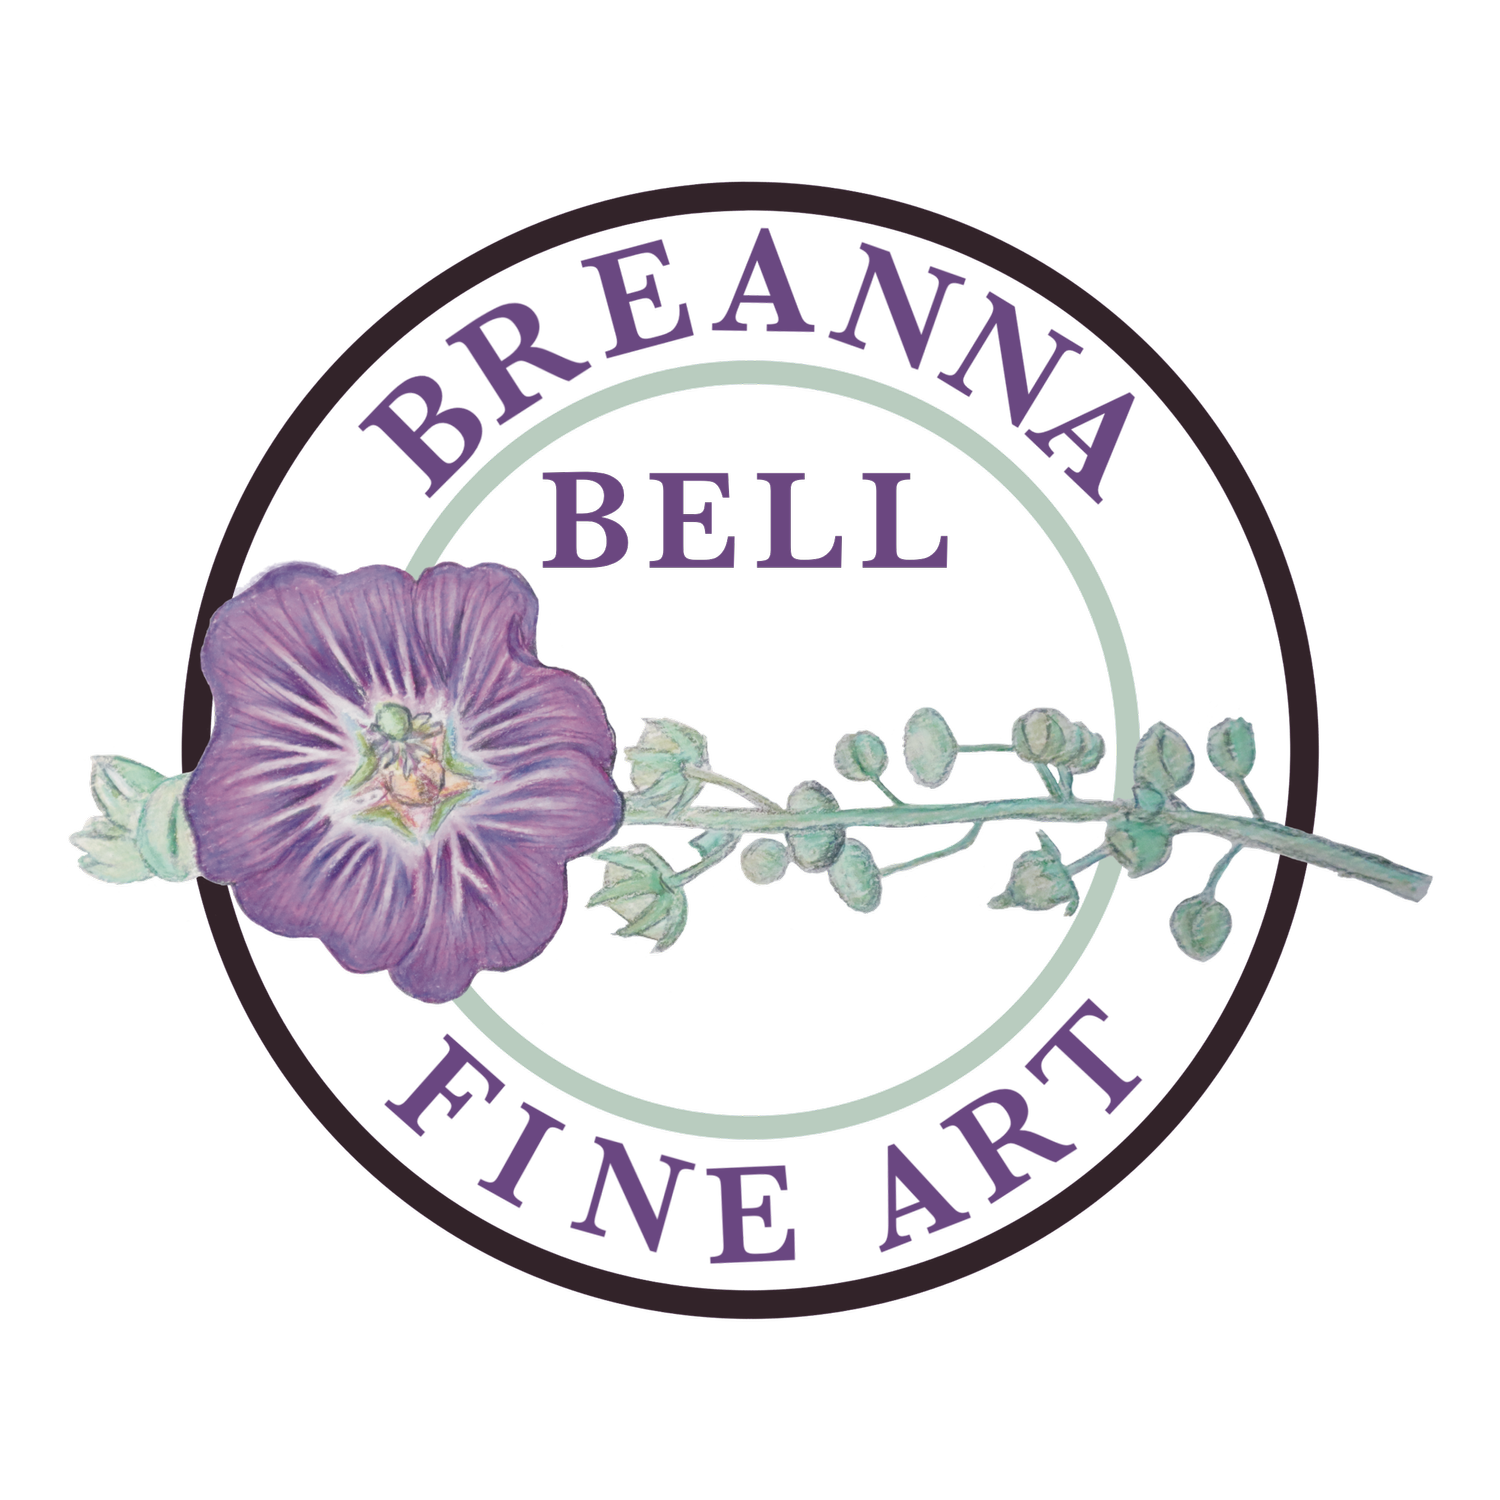 Breanna Bell Art